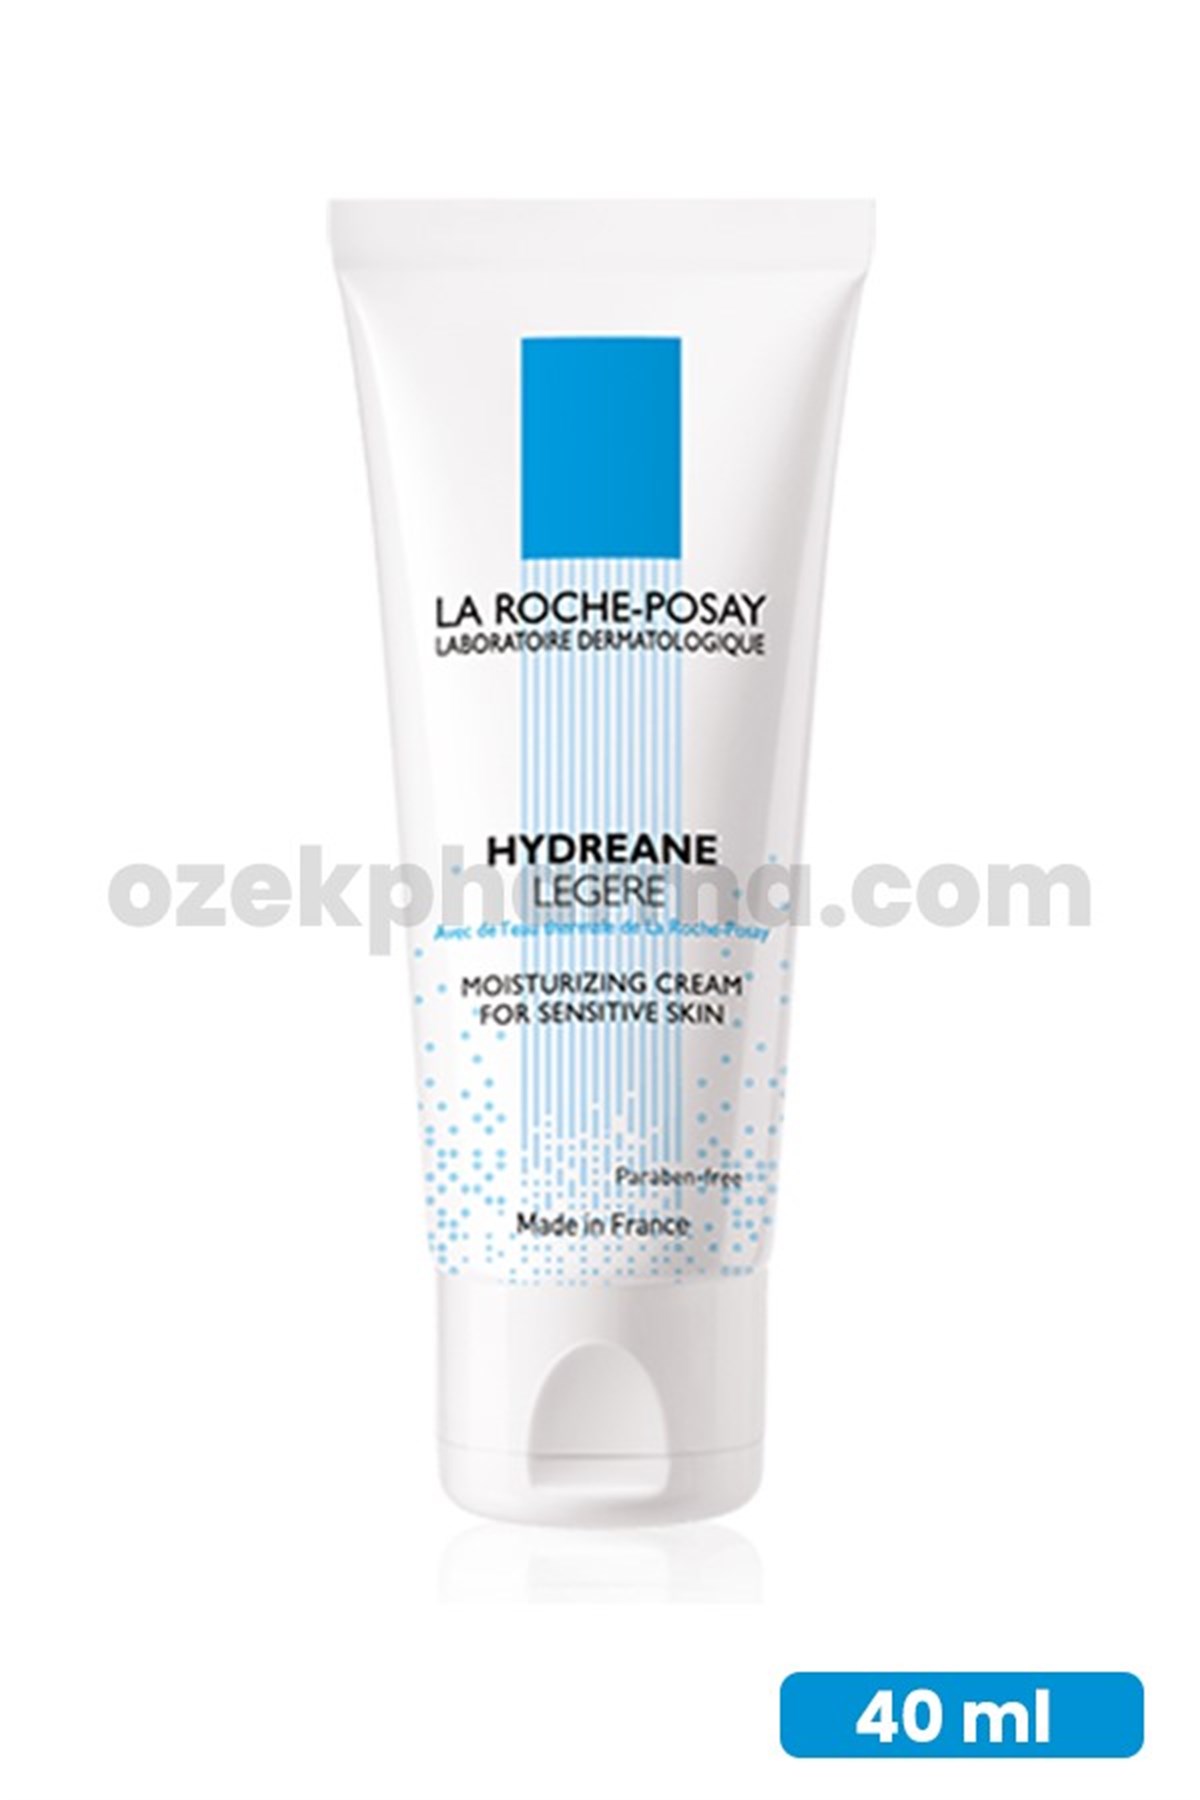 La Roche Posay Hydreane Legere 40 ml | ozekpharma.com